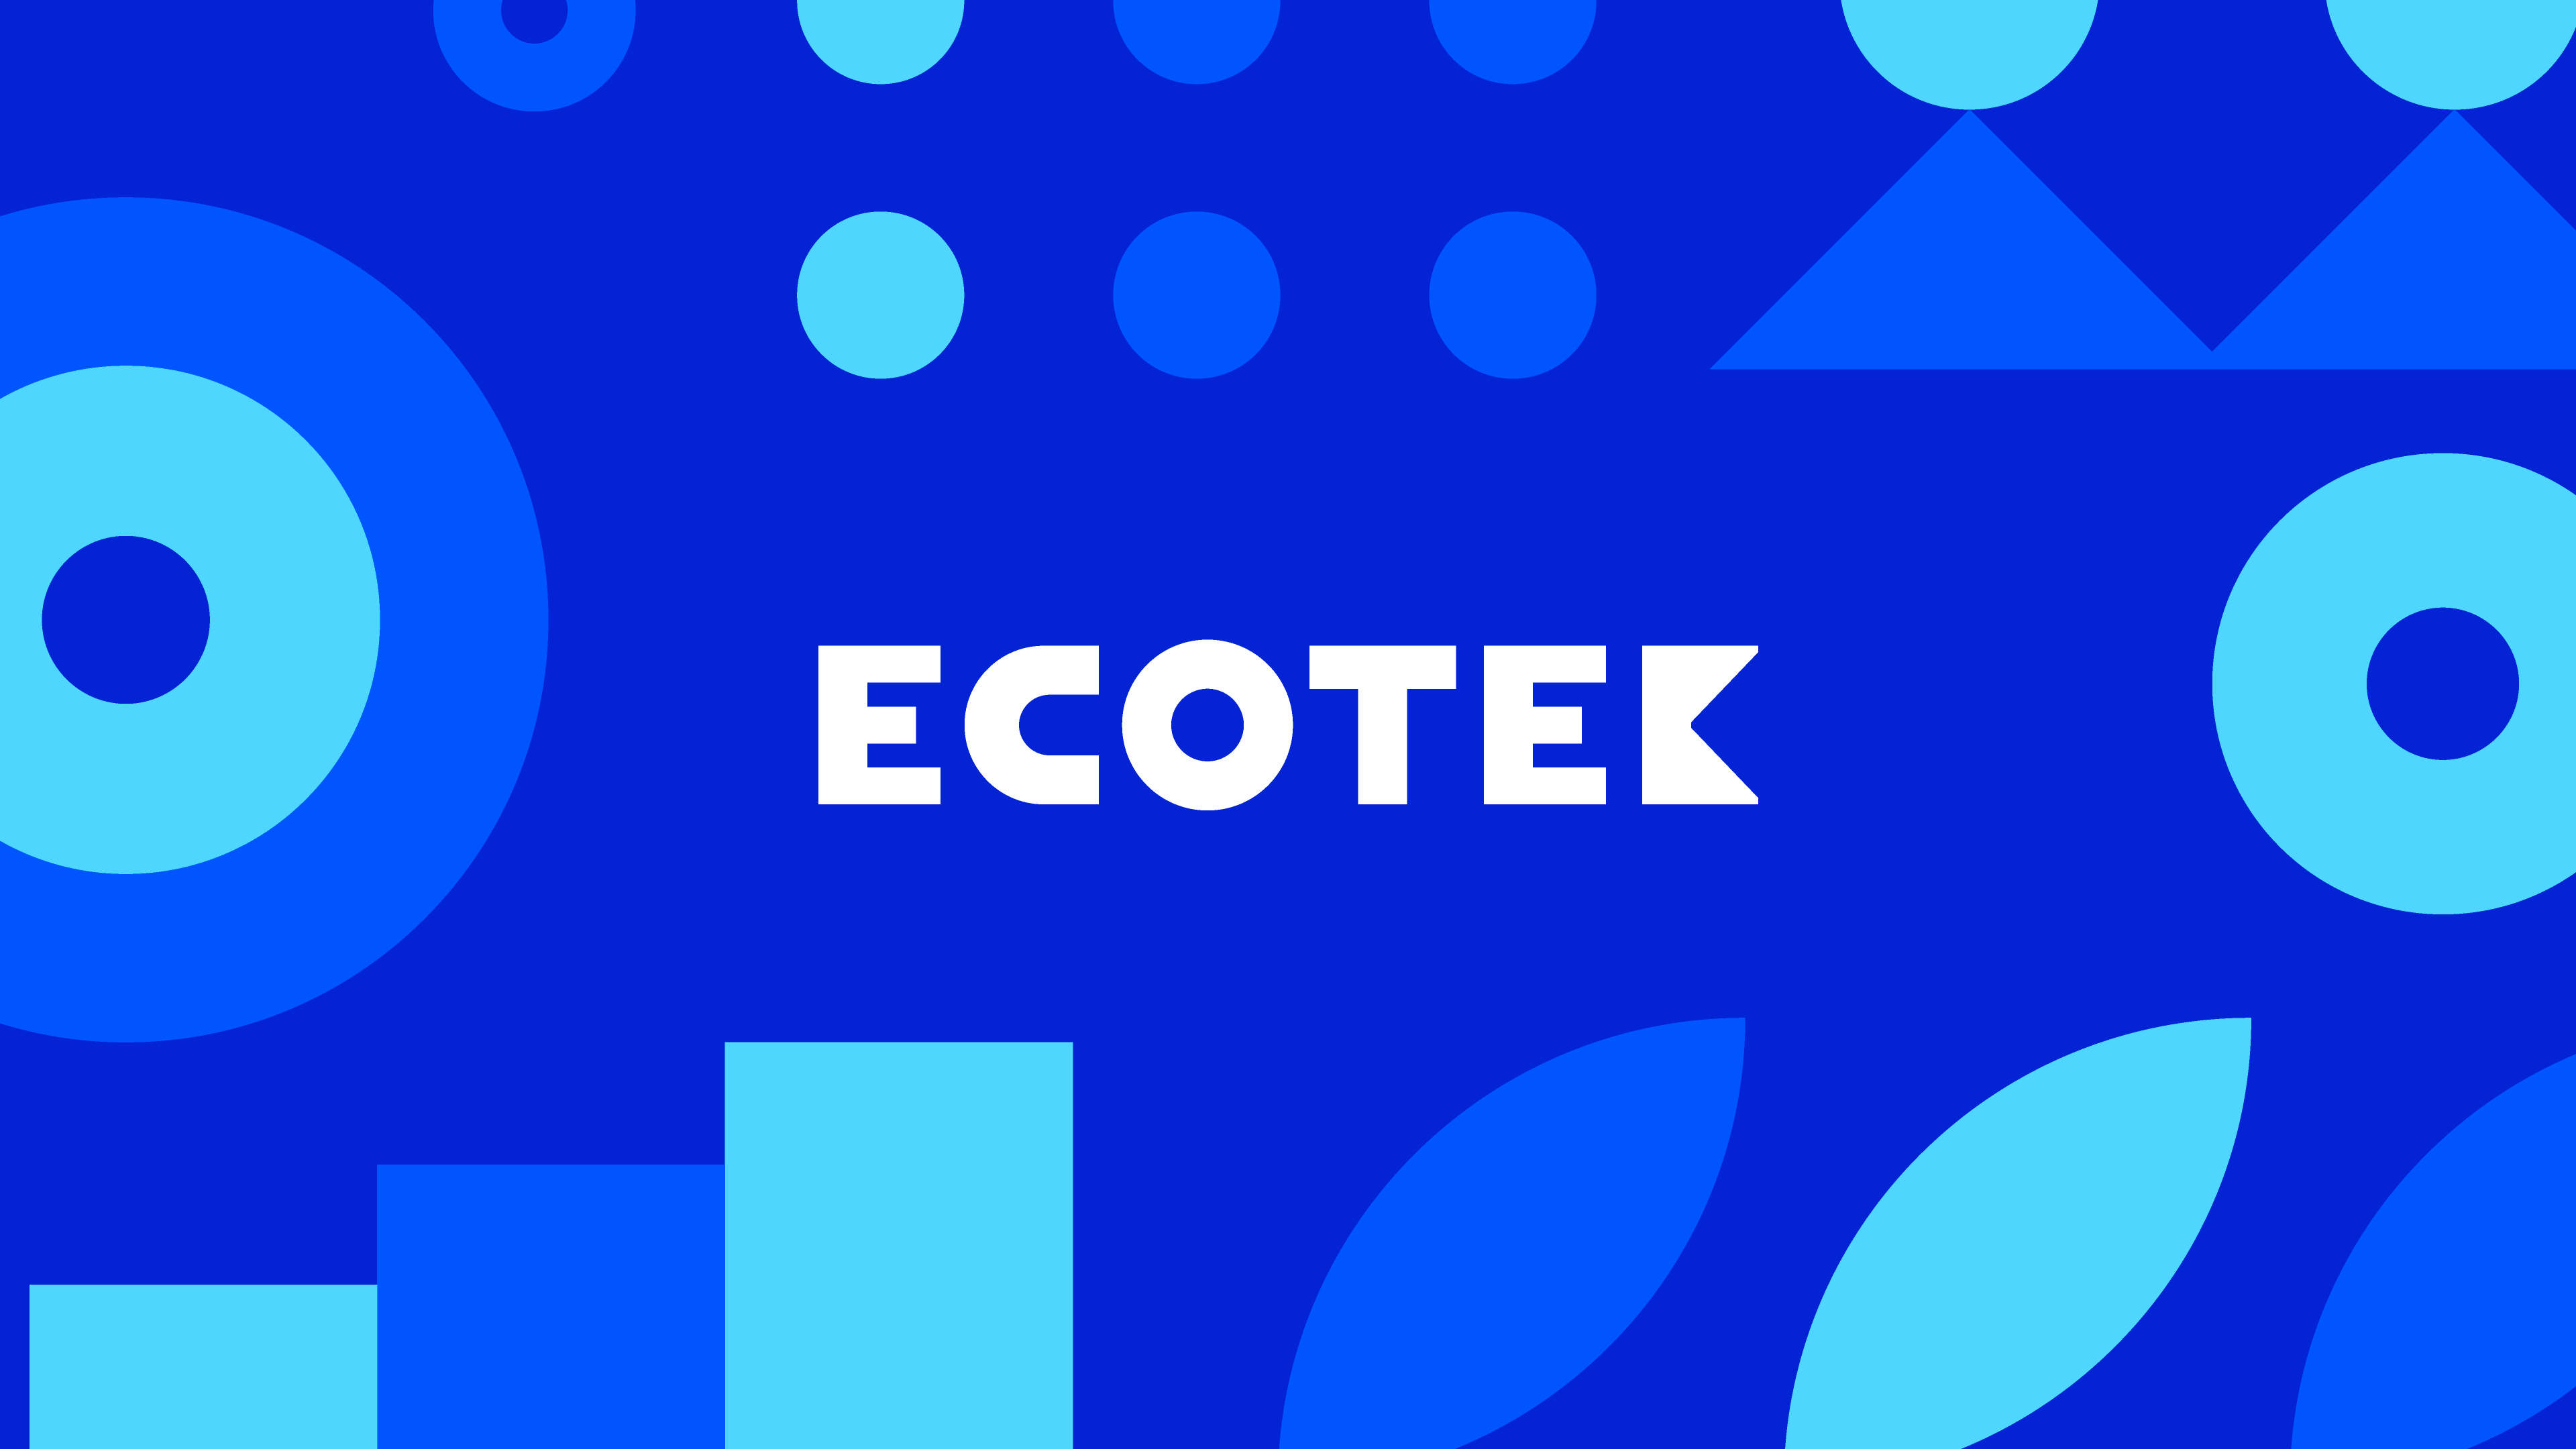 Ecotek Ecosystem Branding Design by Humanda